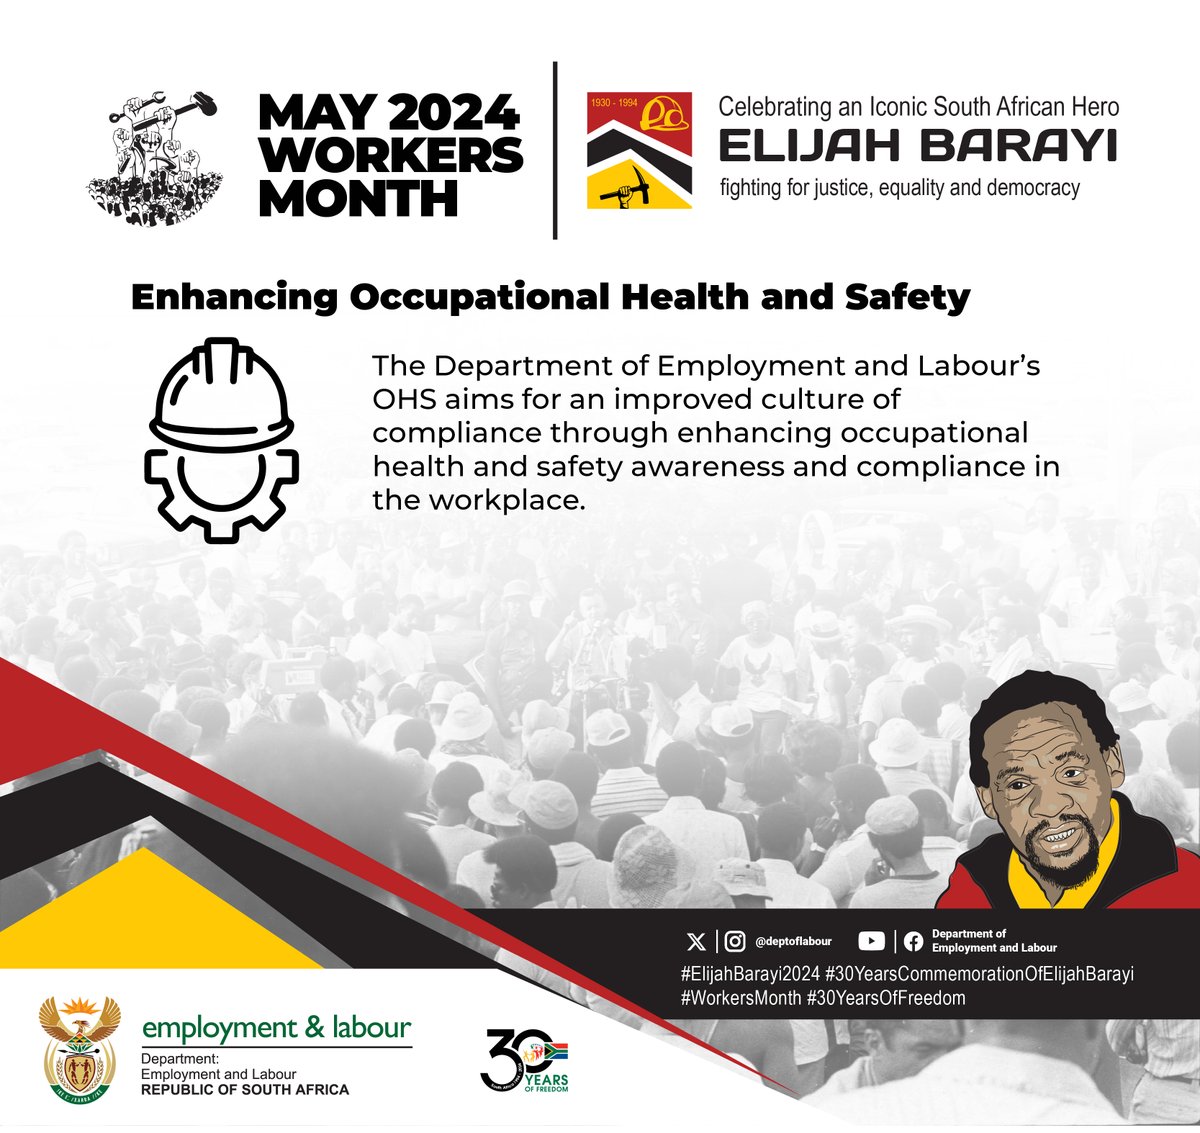 [Infographic] Enhancing Occupational Health and Safety  #ElijahBarayi2024 #30YearsCommemorationOfElijahBarayi
#WorkersMonth #30YearsOfFreedom